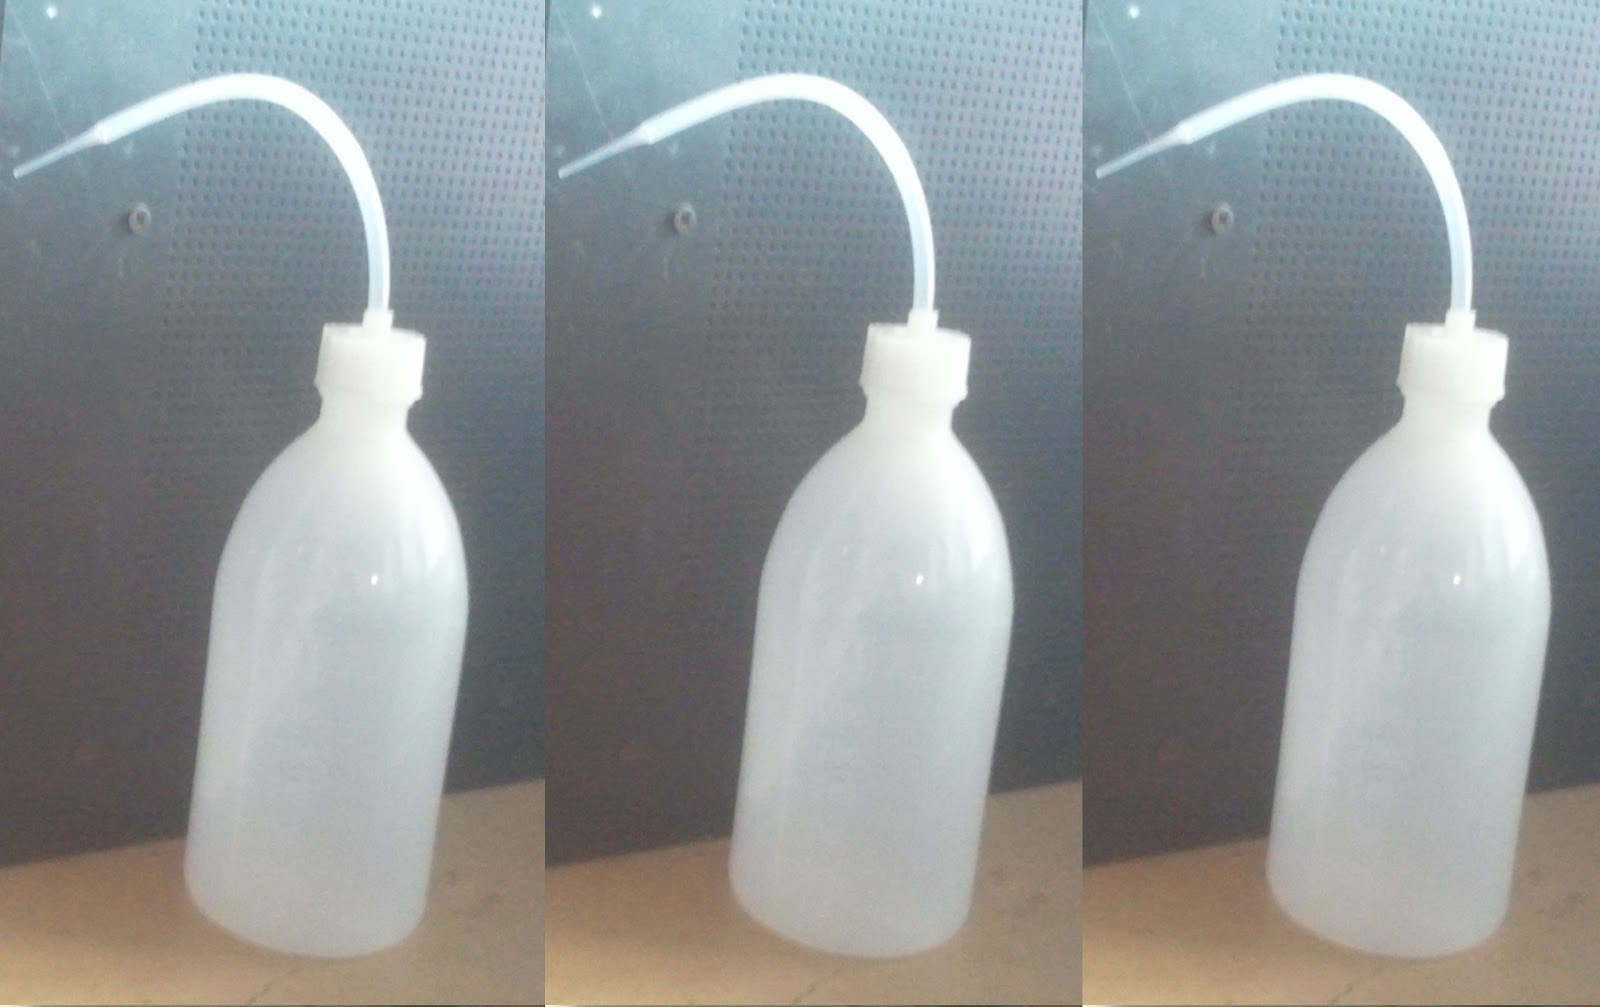  Botol Semprot  Distributor Bahan Kimia Alat Peraga 